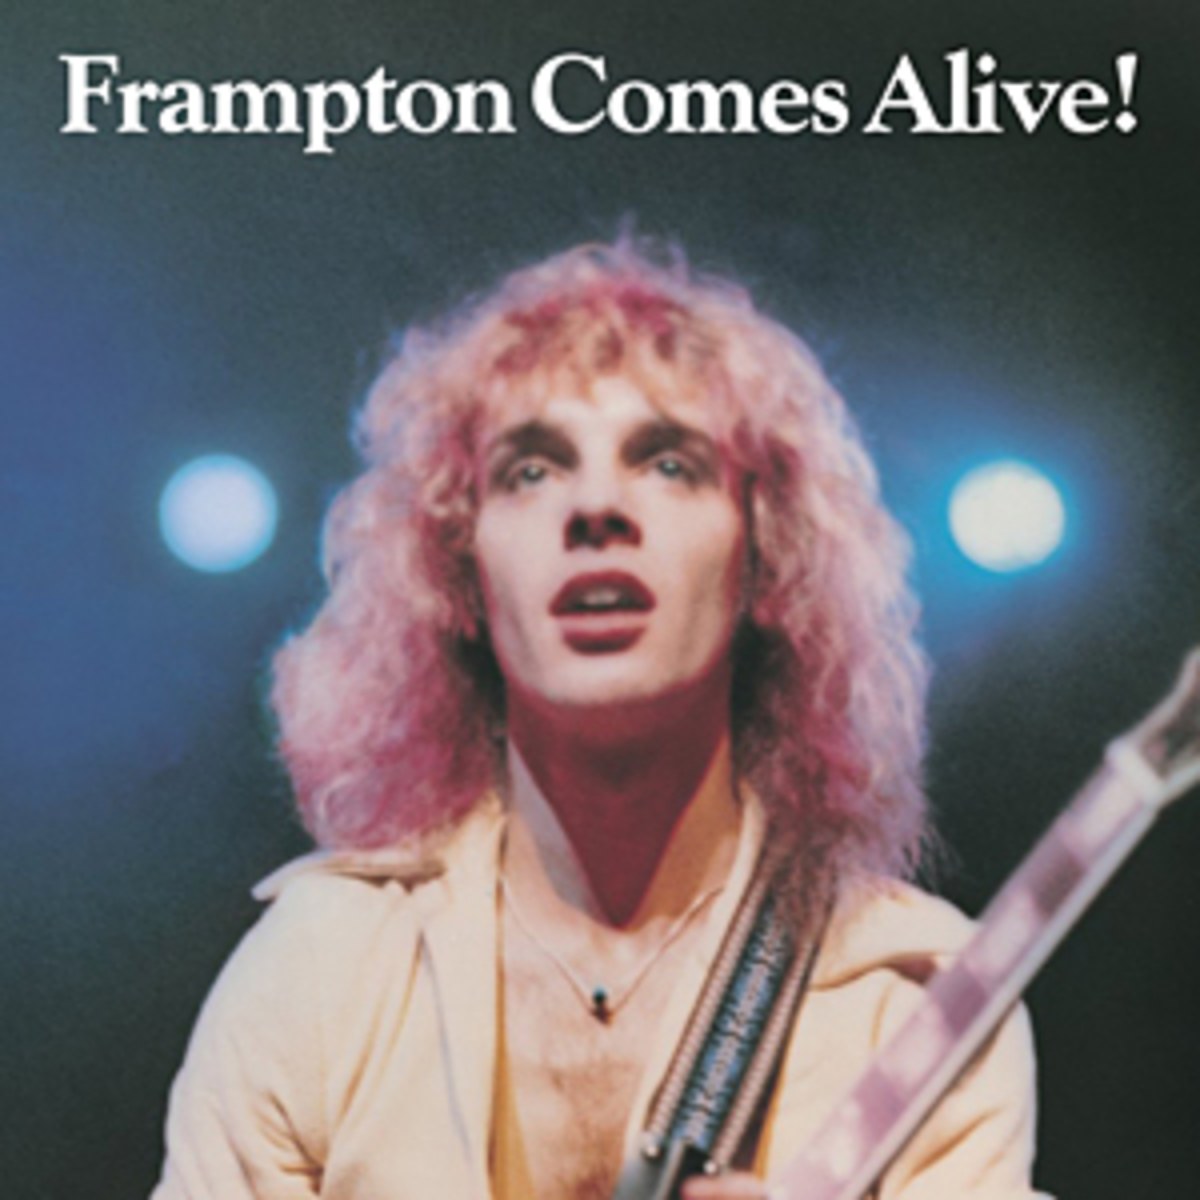 Peter Frampton - Frampton Comes Alive! (1976)